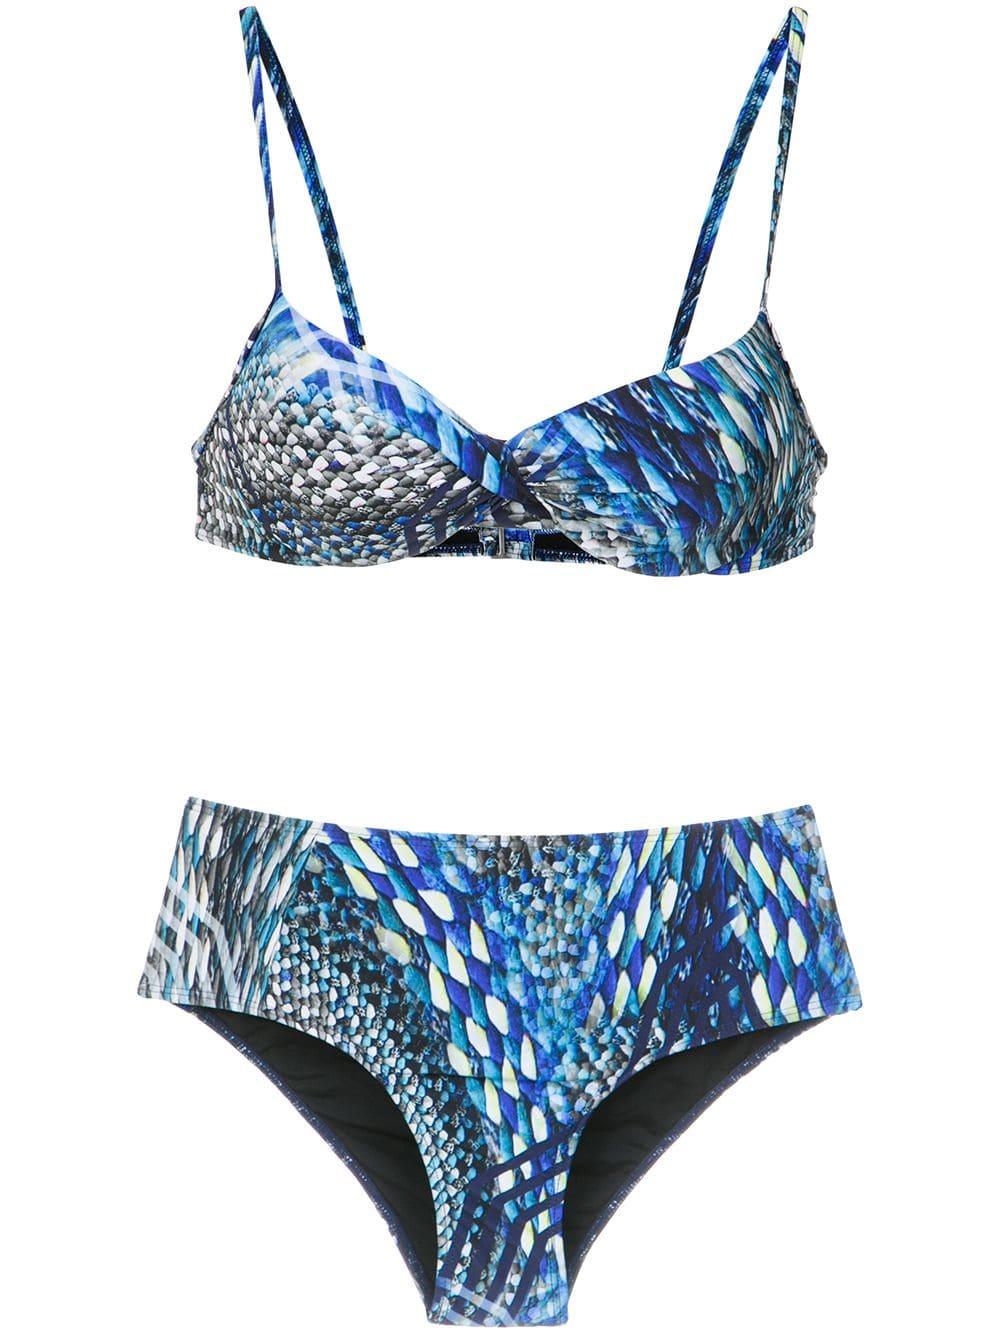 Lygia & Nanny Synthetic Veronica Bikini Set in Blue - Lyst